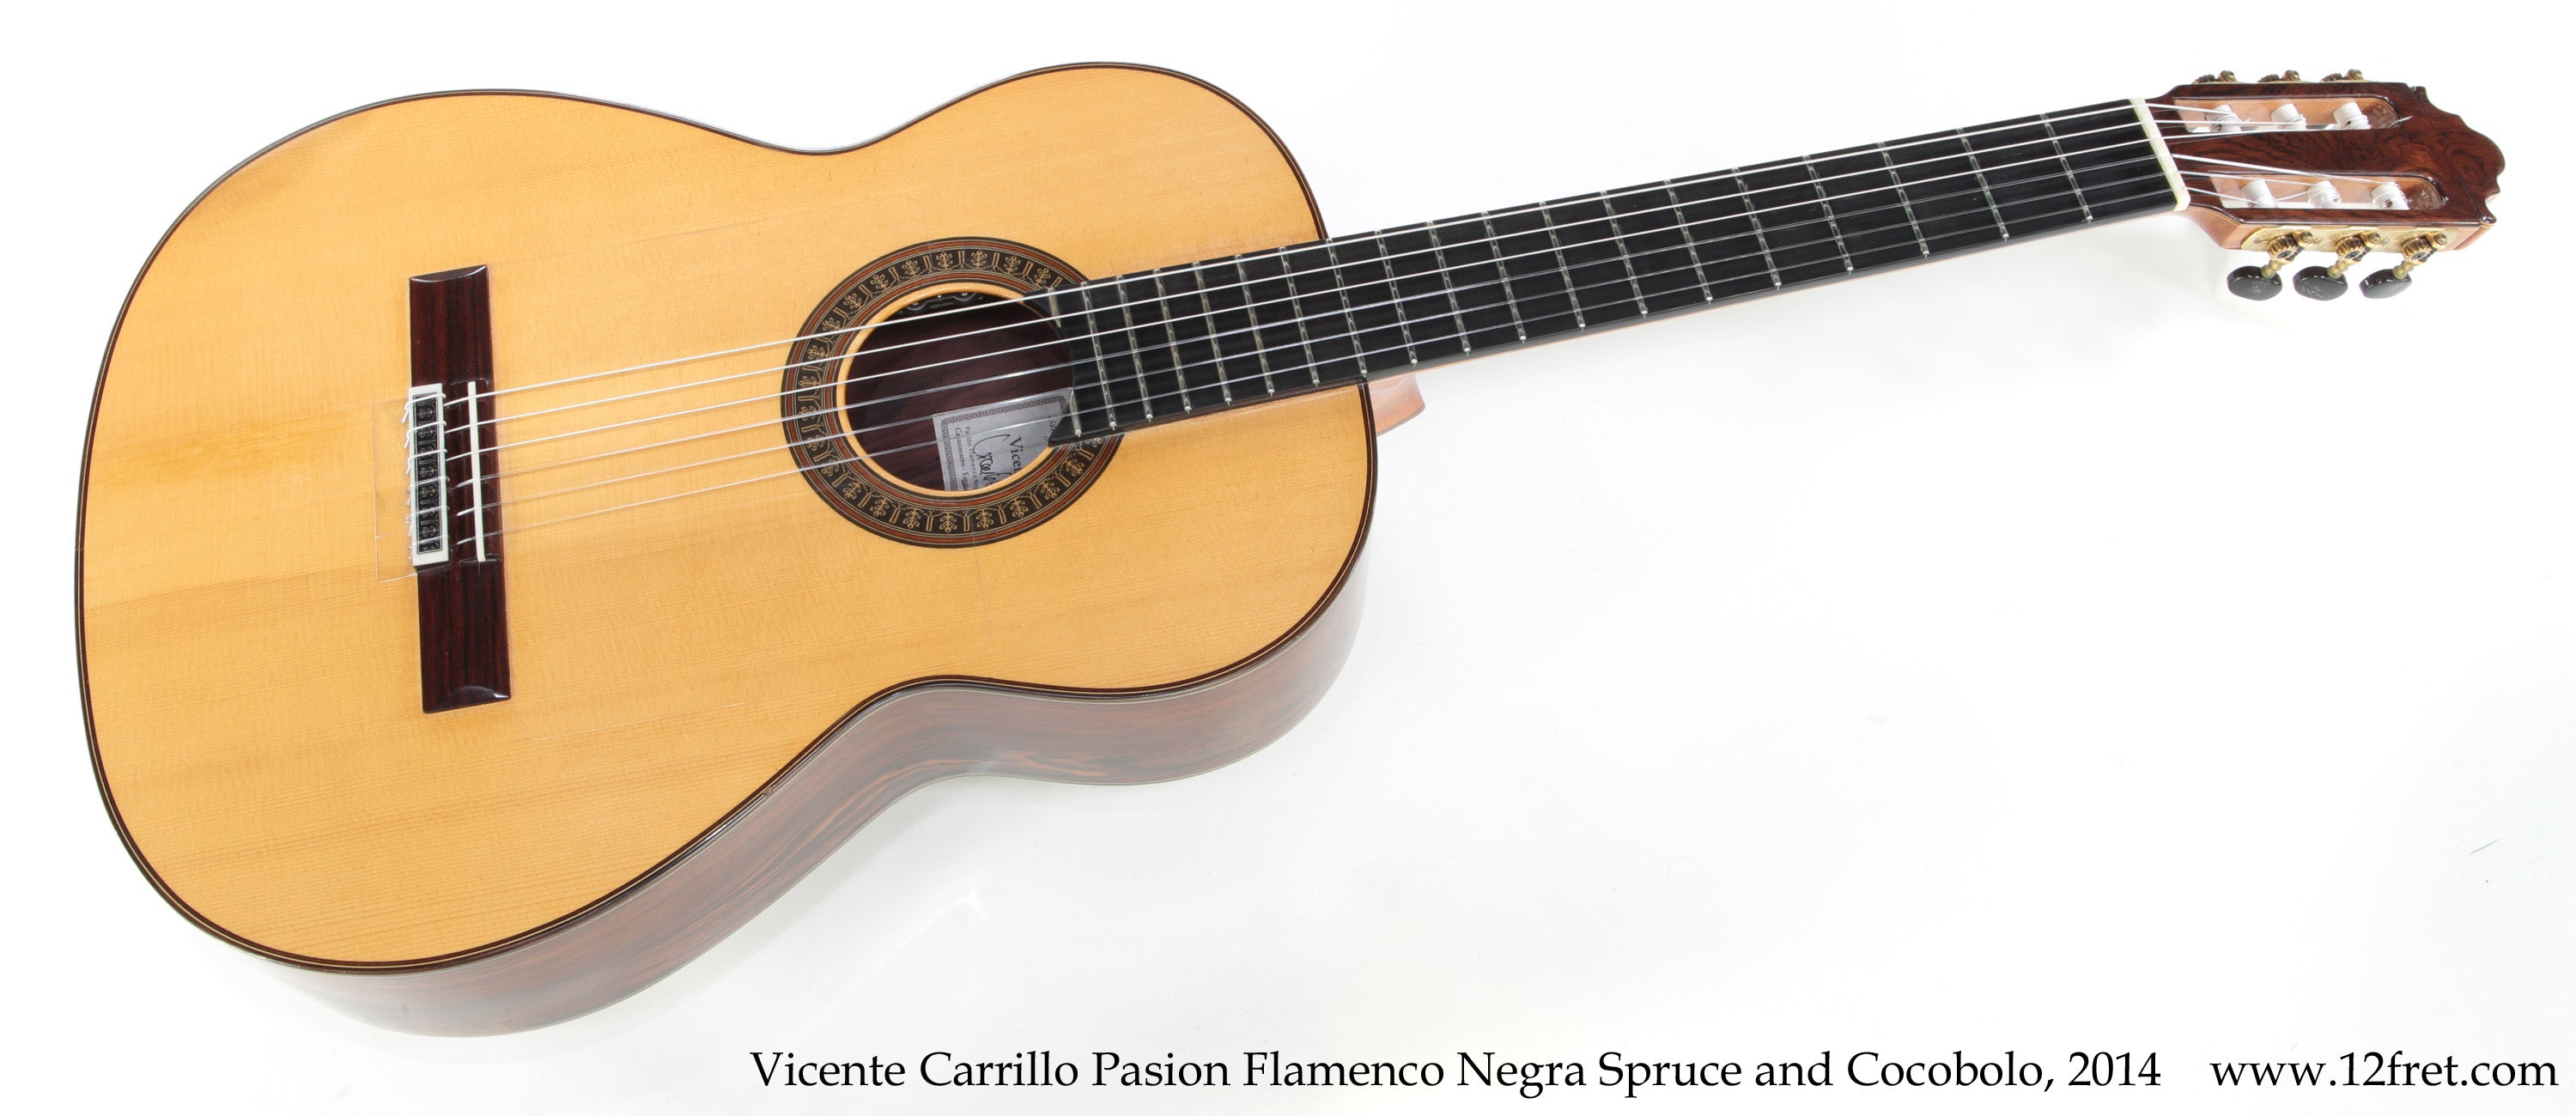 Vicente Carrillo Pasion Flamenco Negra Spruce and Cocobolo, 2014 - The Twelfth Fret